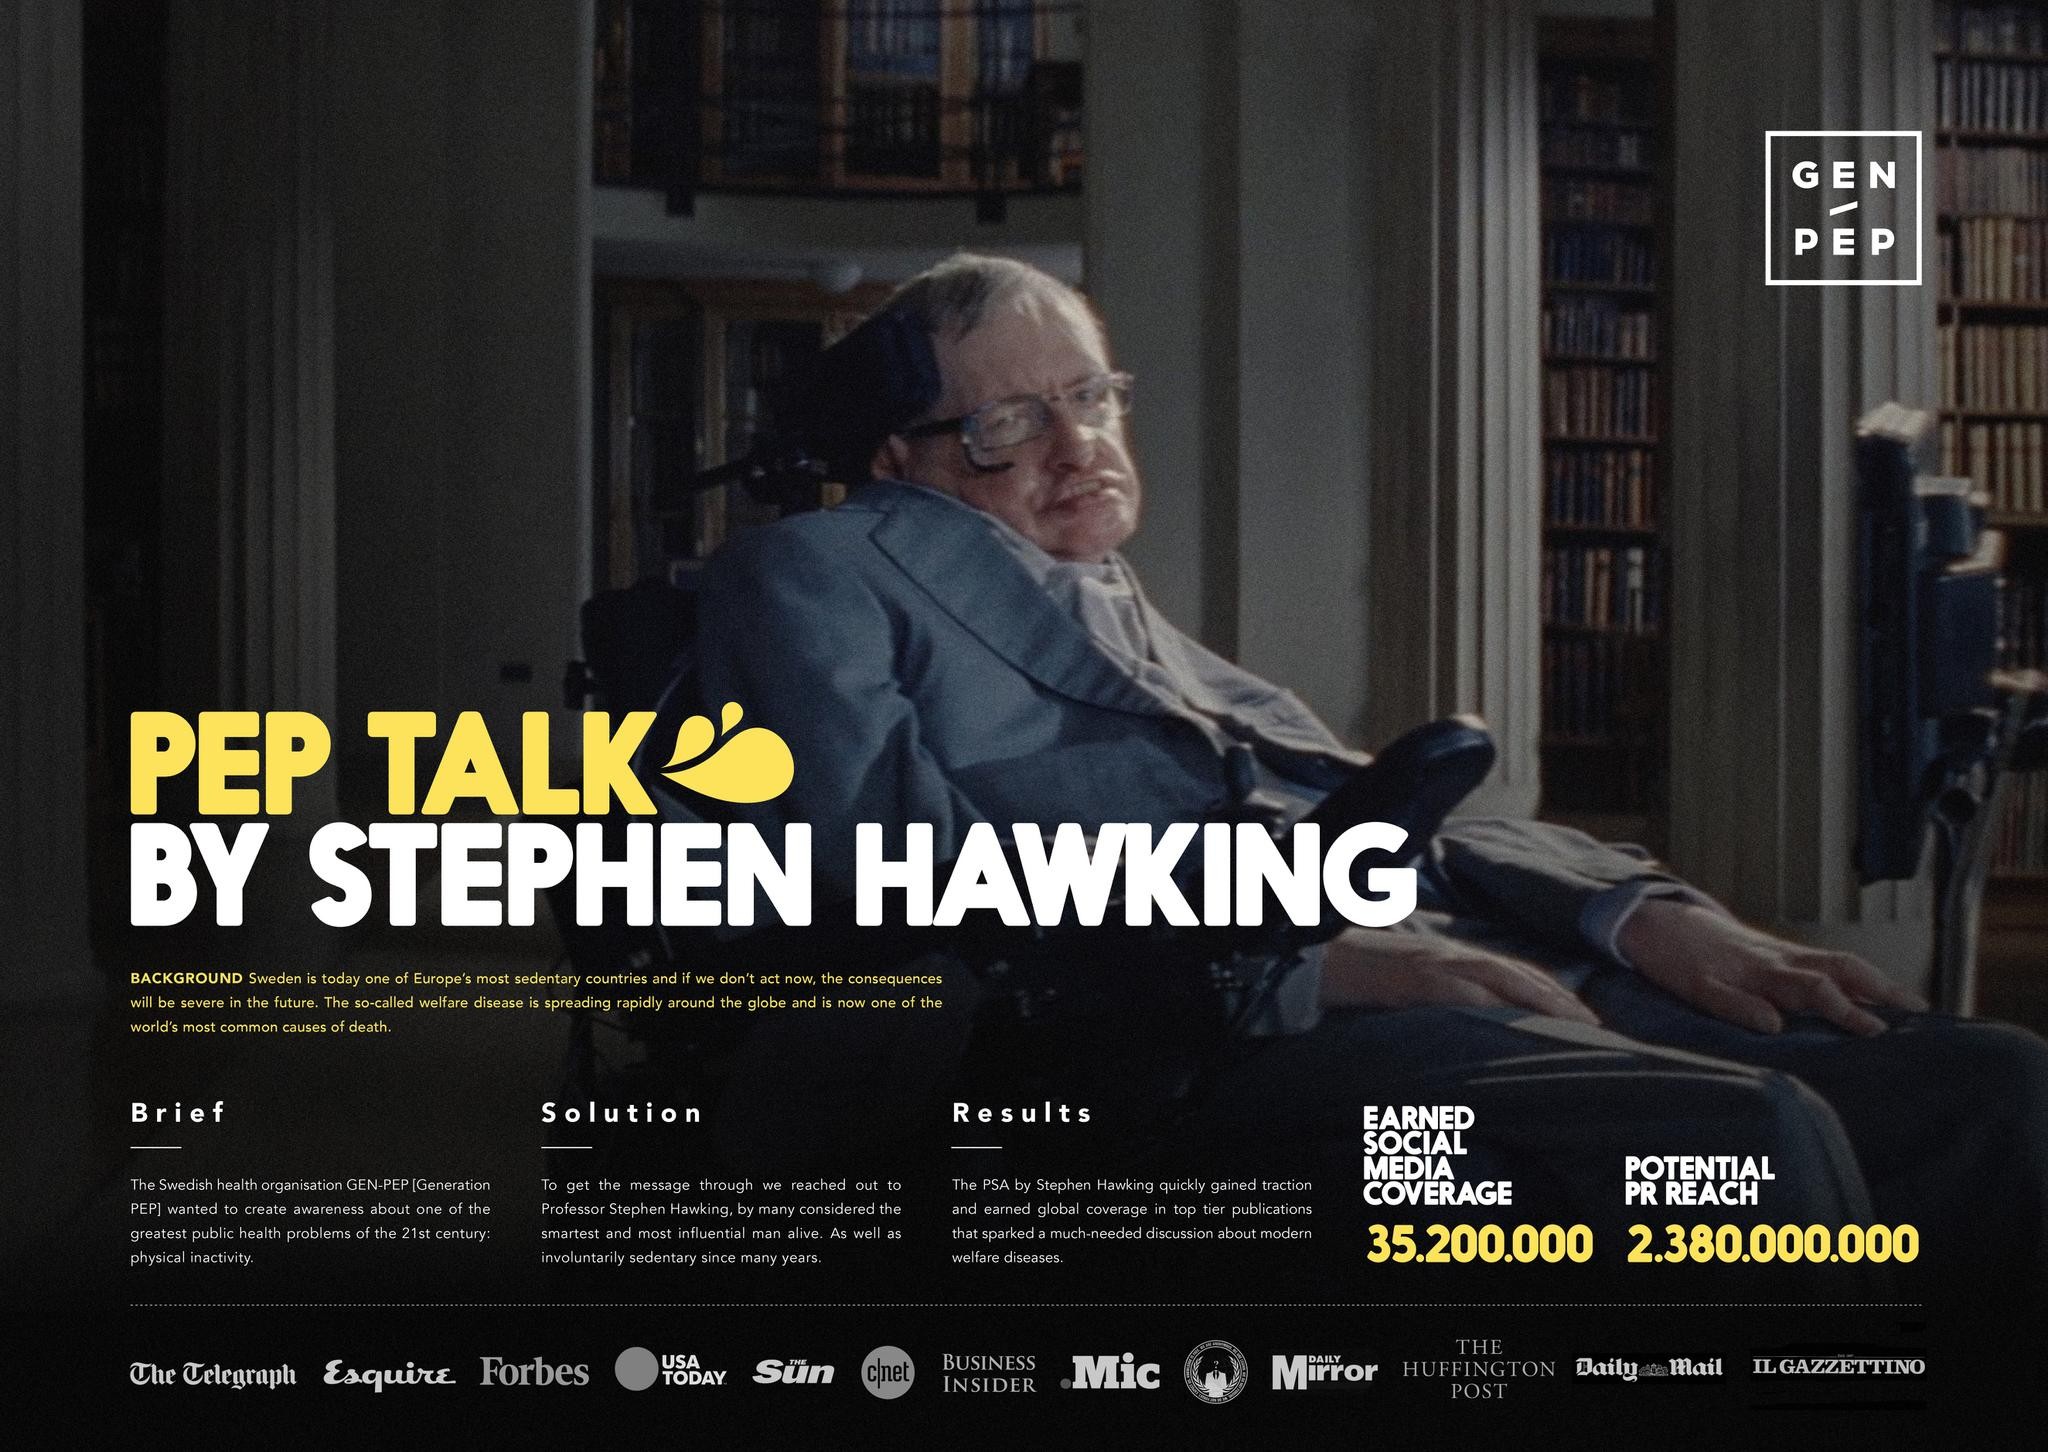 Pep Talk by Stephen Hawking